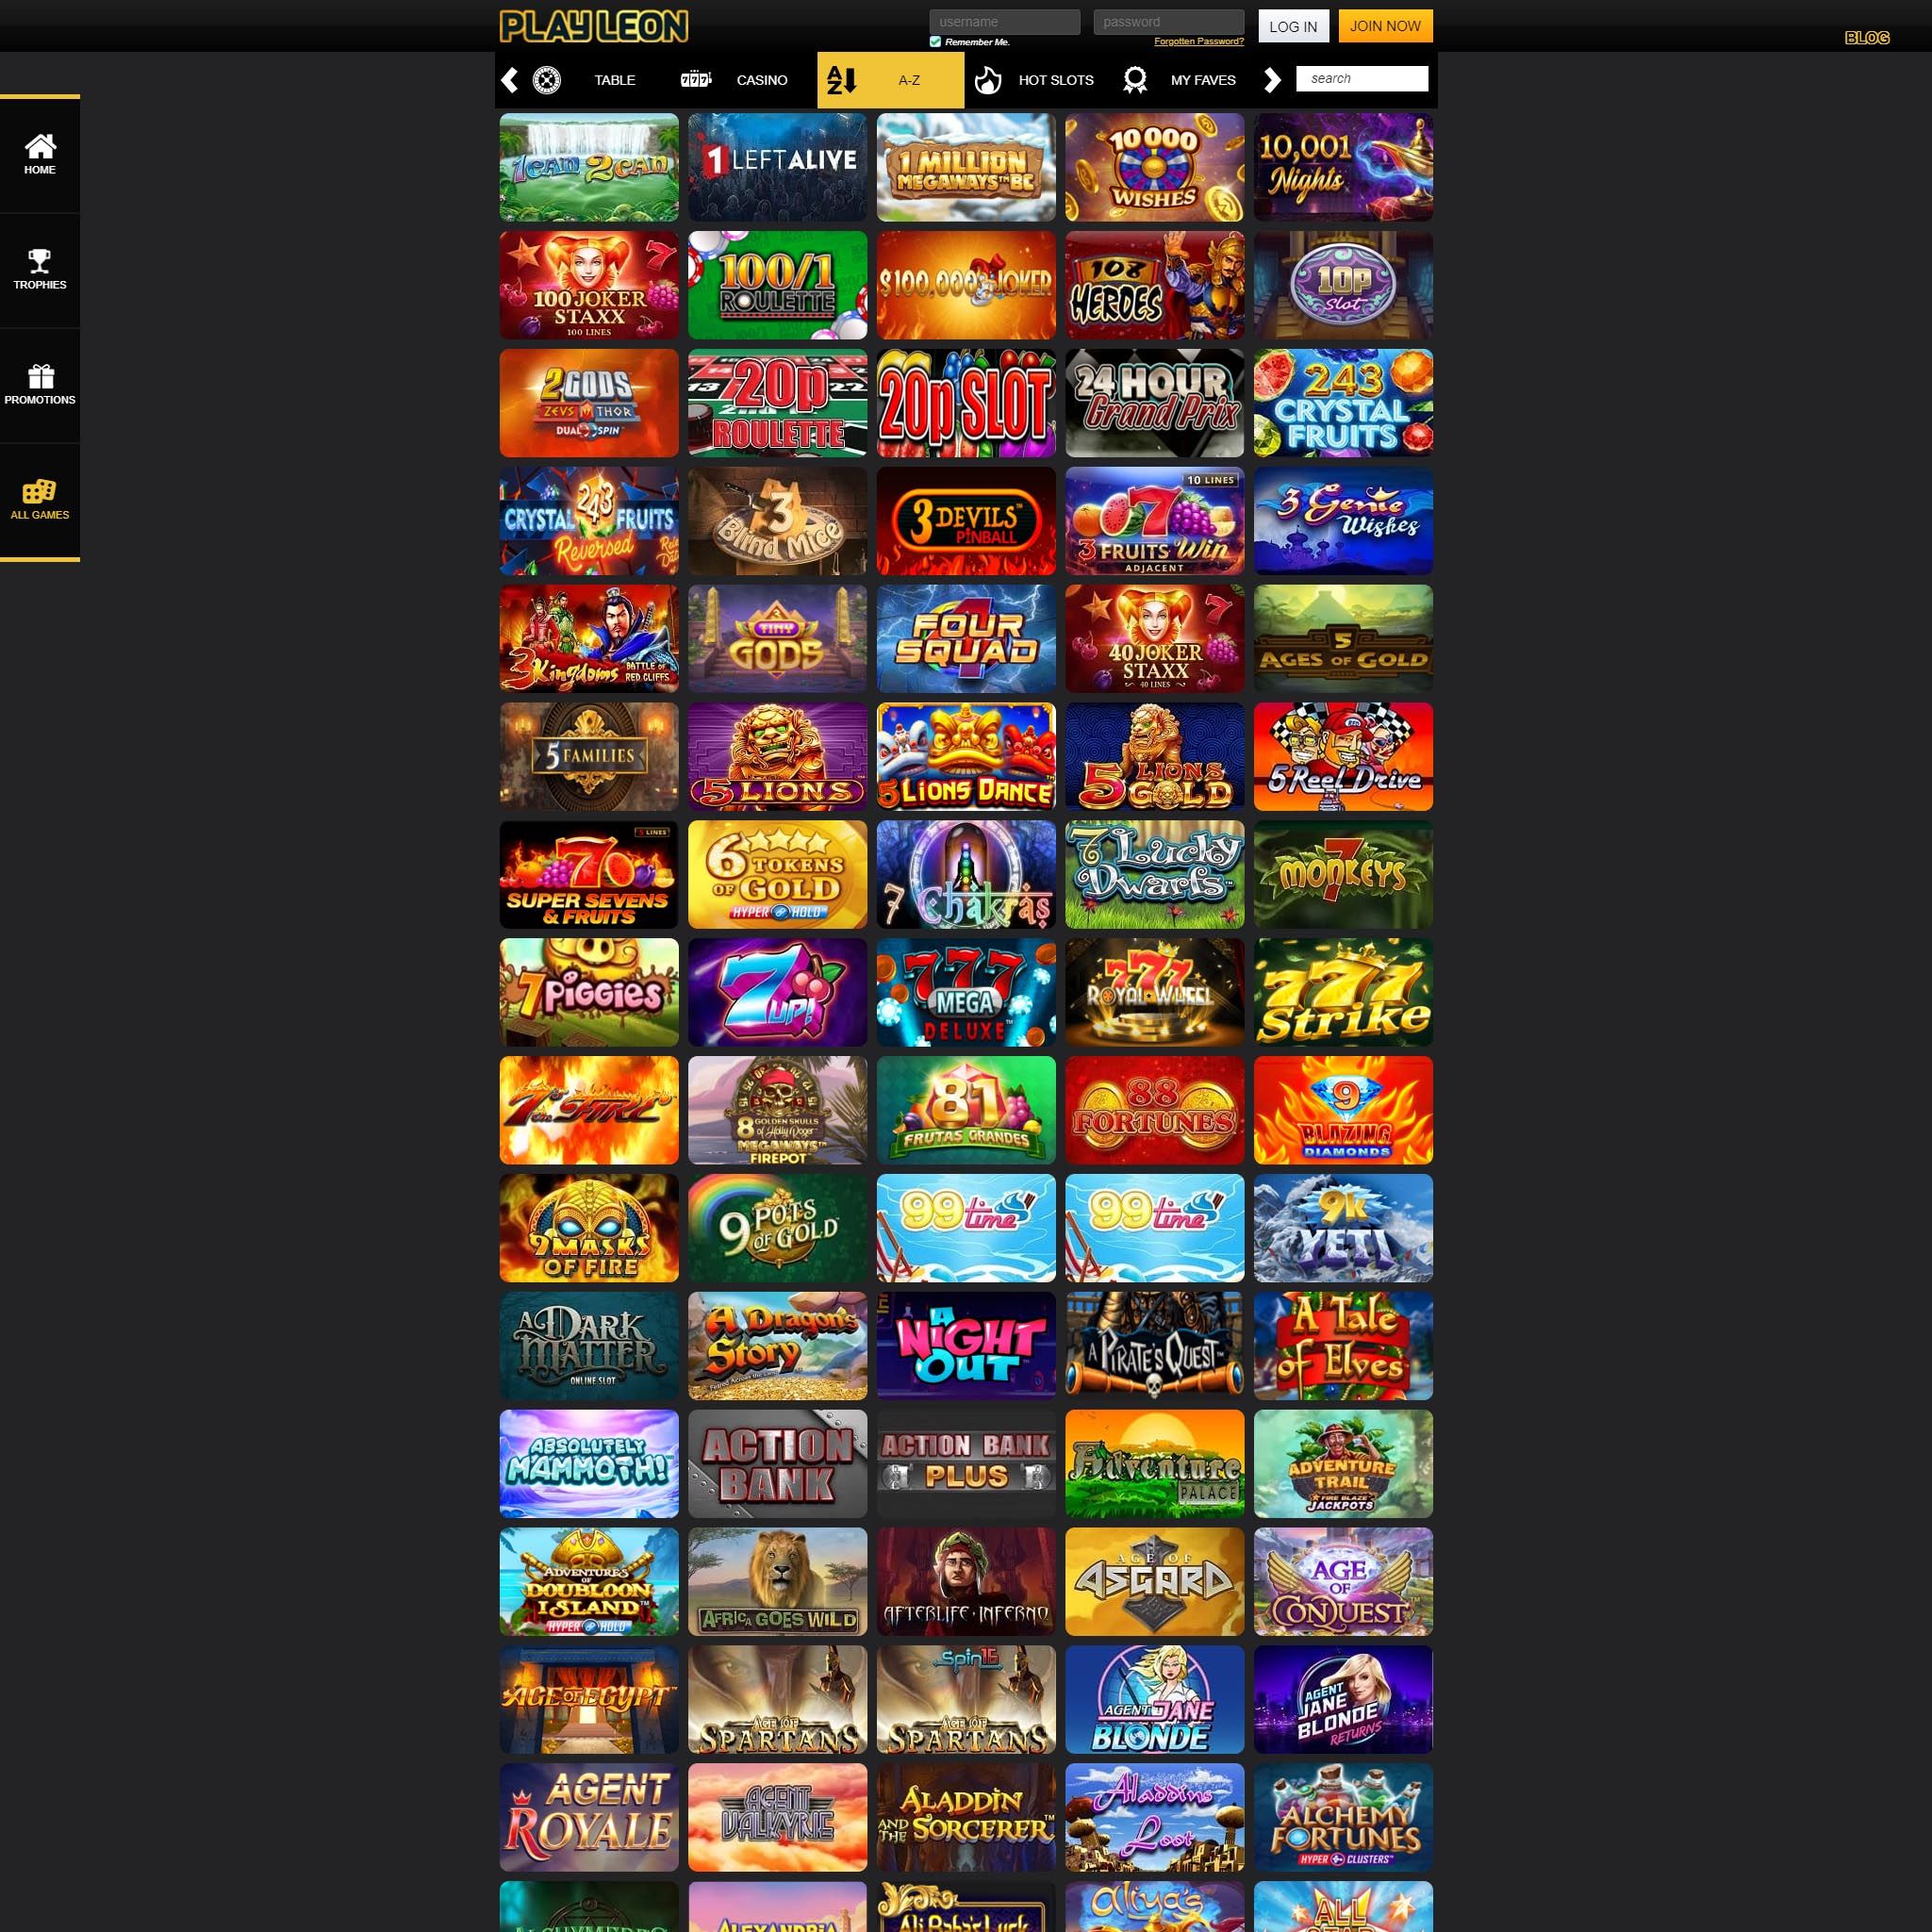 PlayLeon Casino full games catalogue